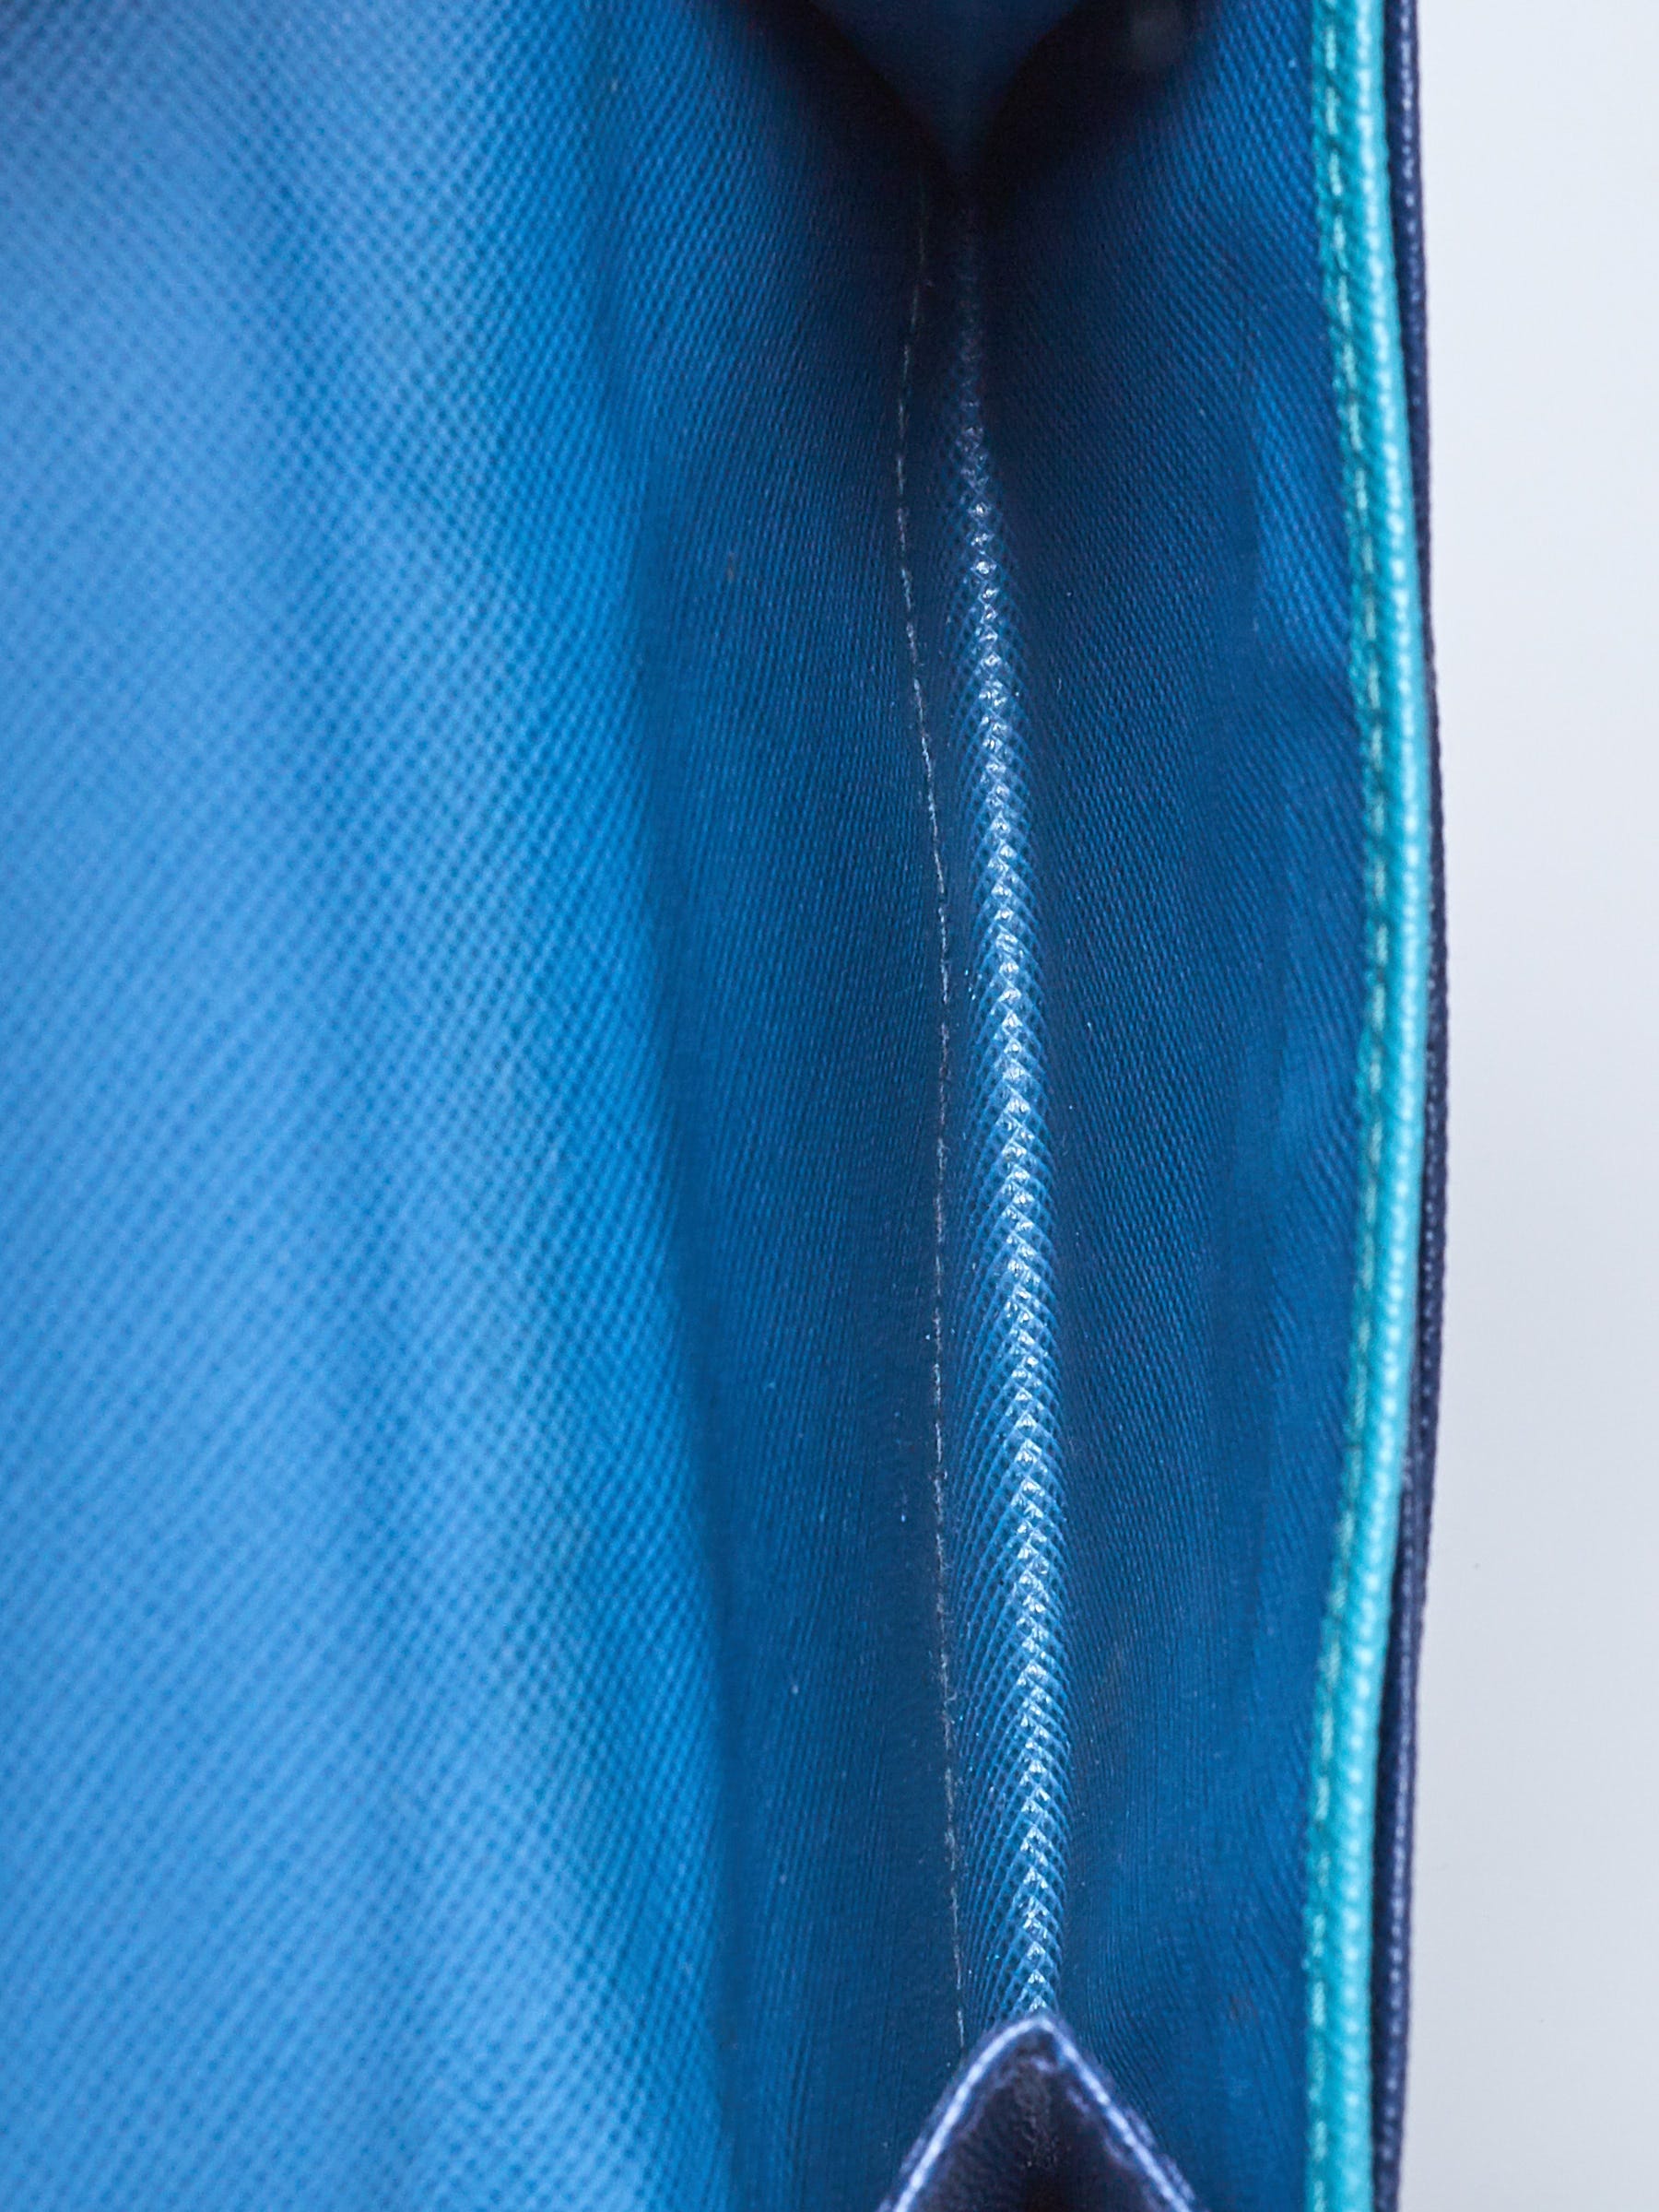 Prada Blue Saffiano Metal Leather Compact Wallet 1M0523 - Yoogi's Closet